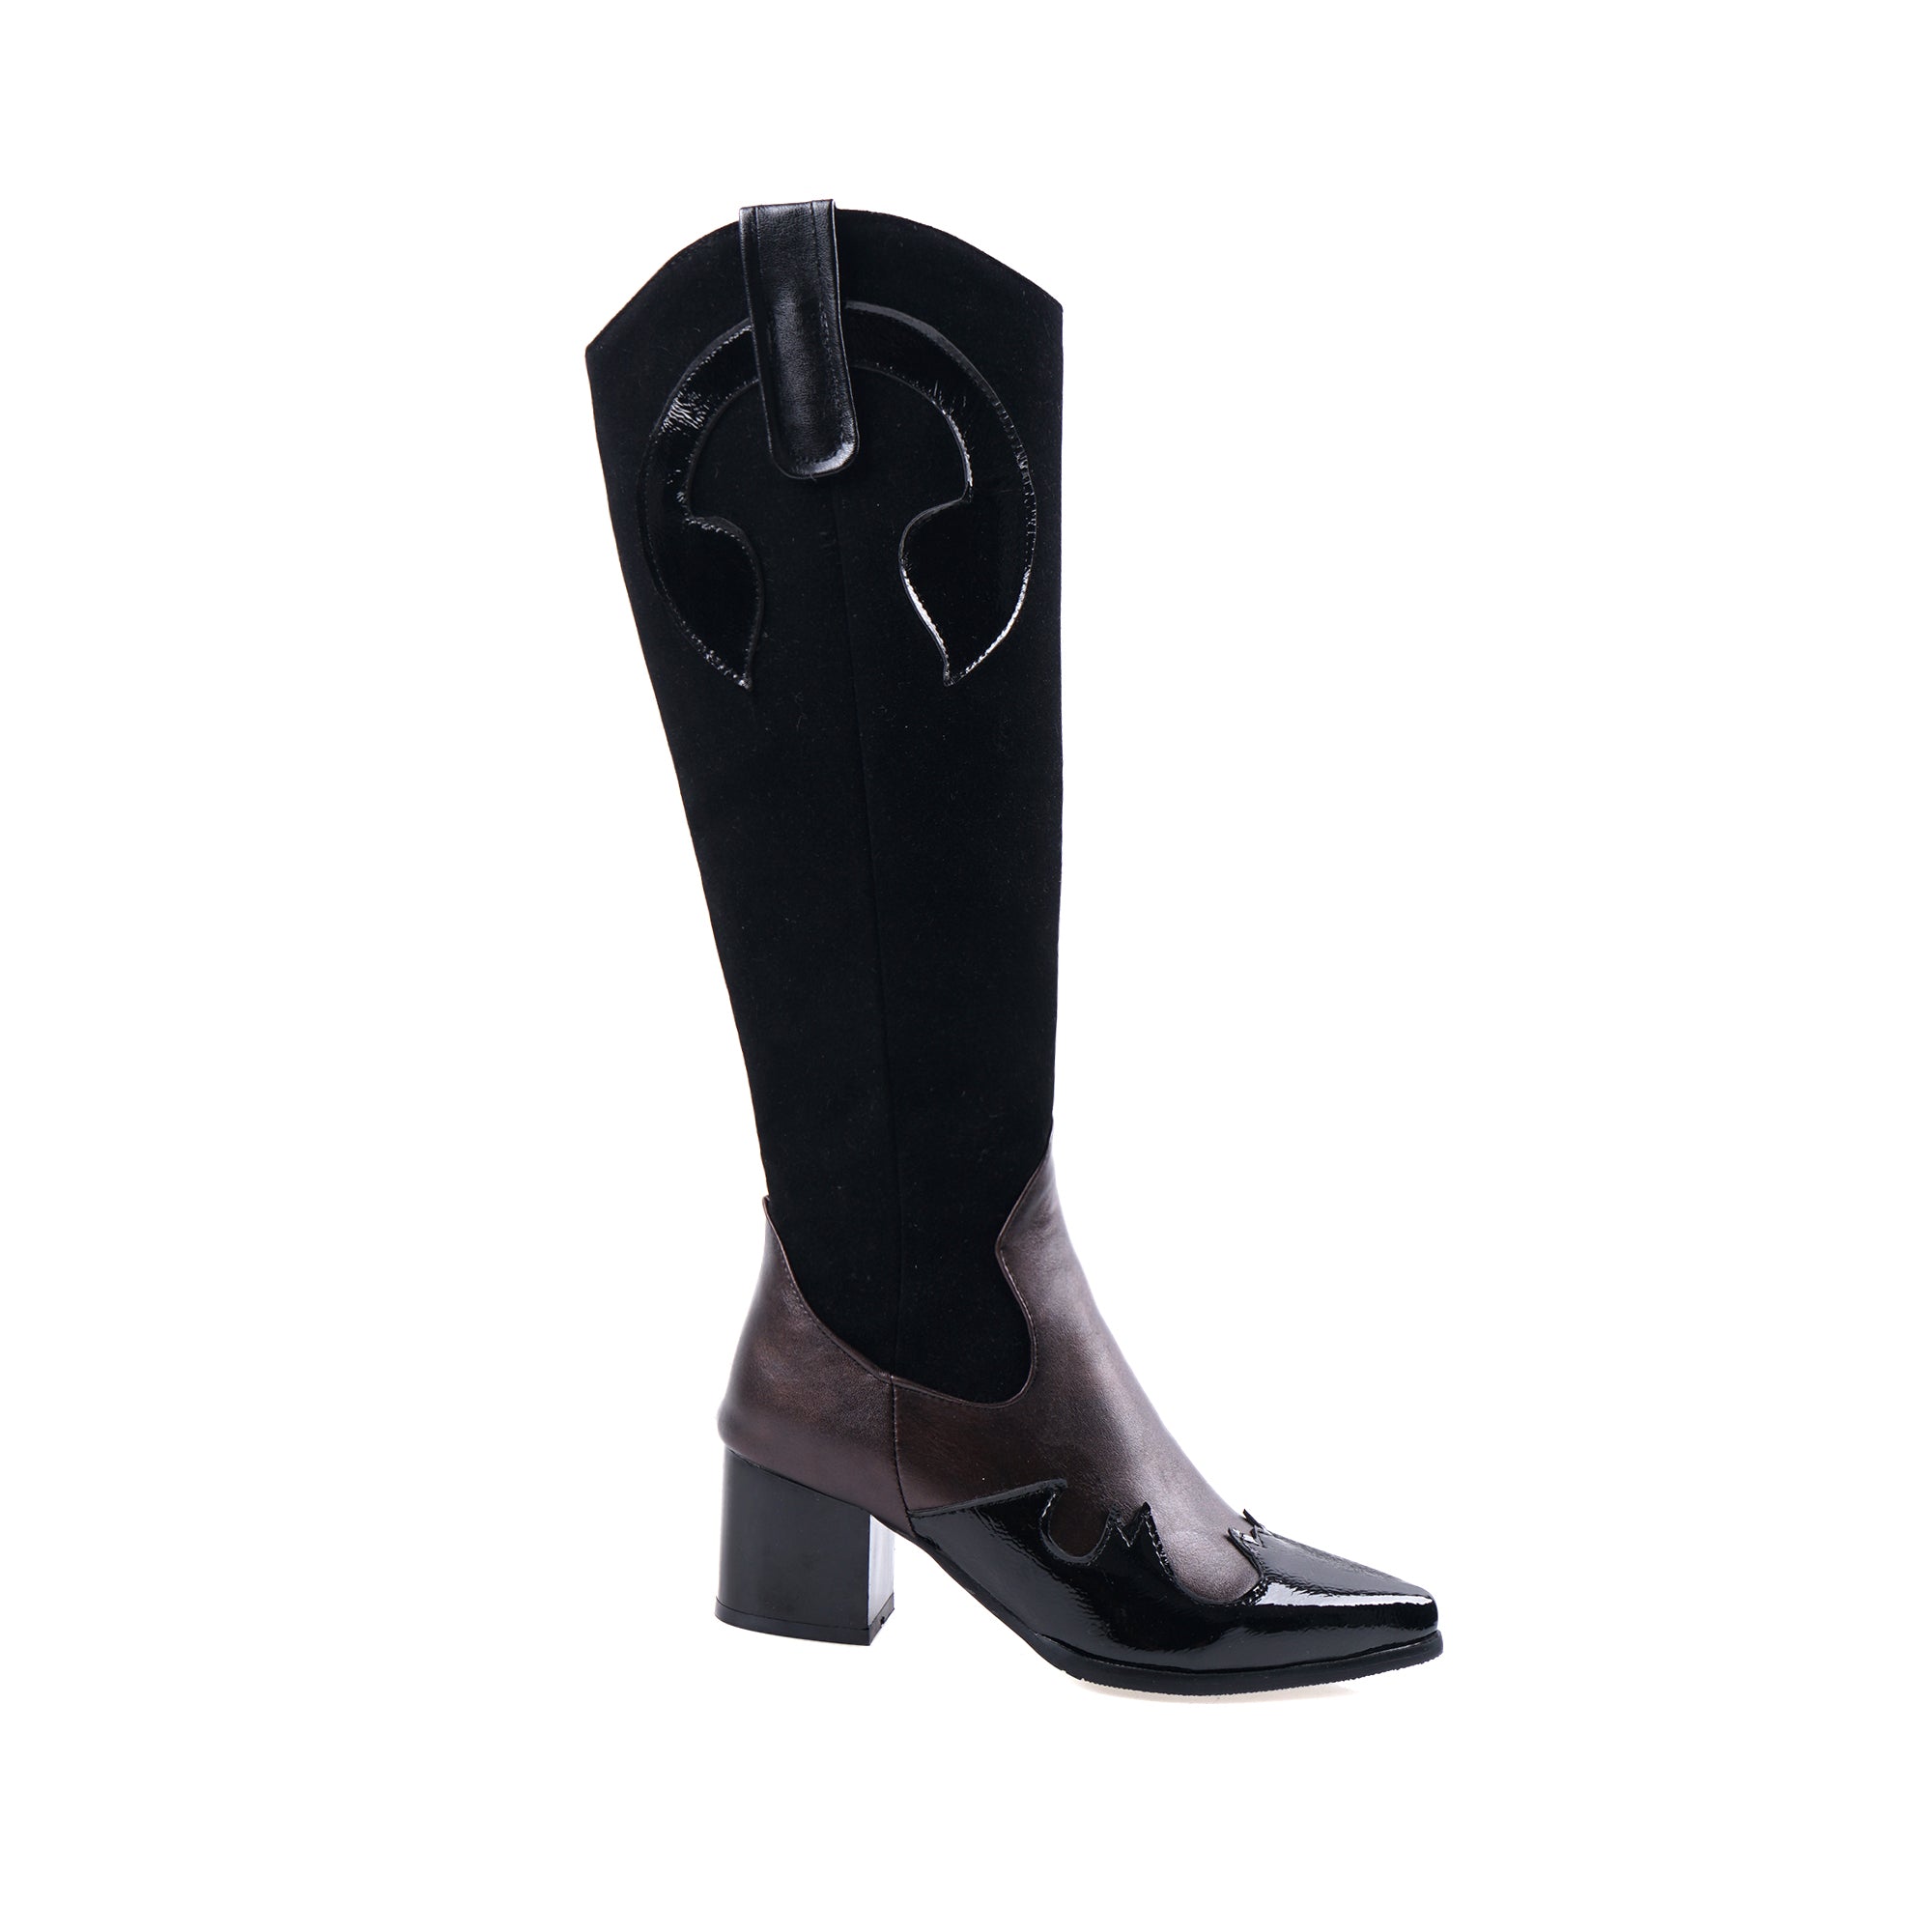 Bigsizeheels Sexy western pointy boots - Black freeshipping - bigsizeheel®-size5-size15 -All Plus Sizes Available!